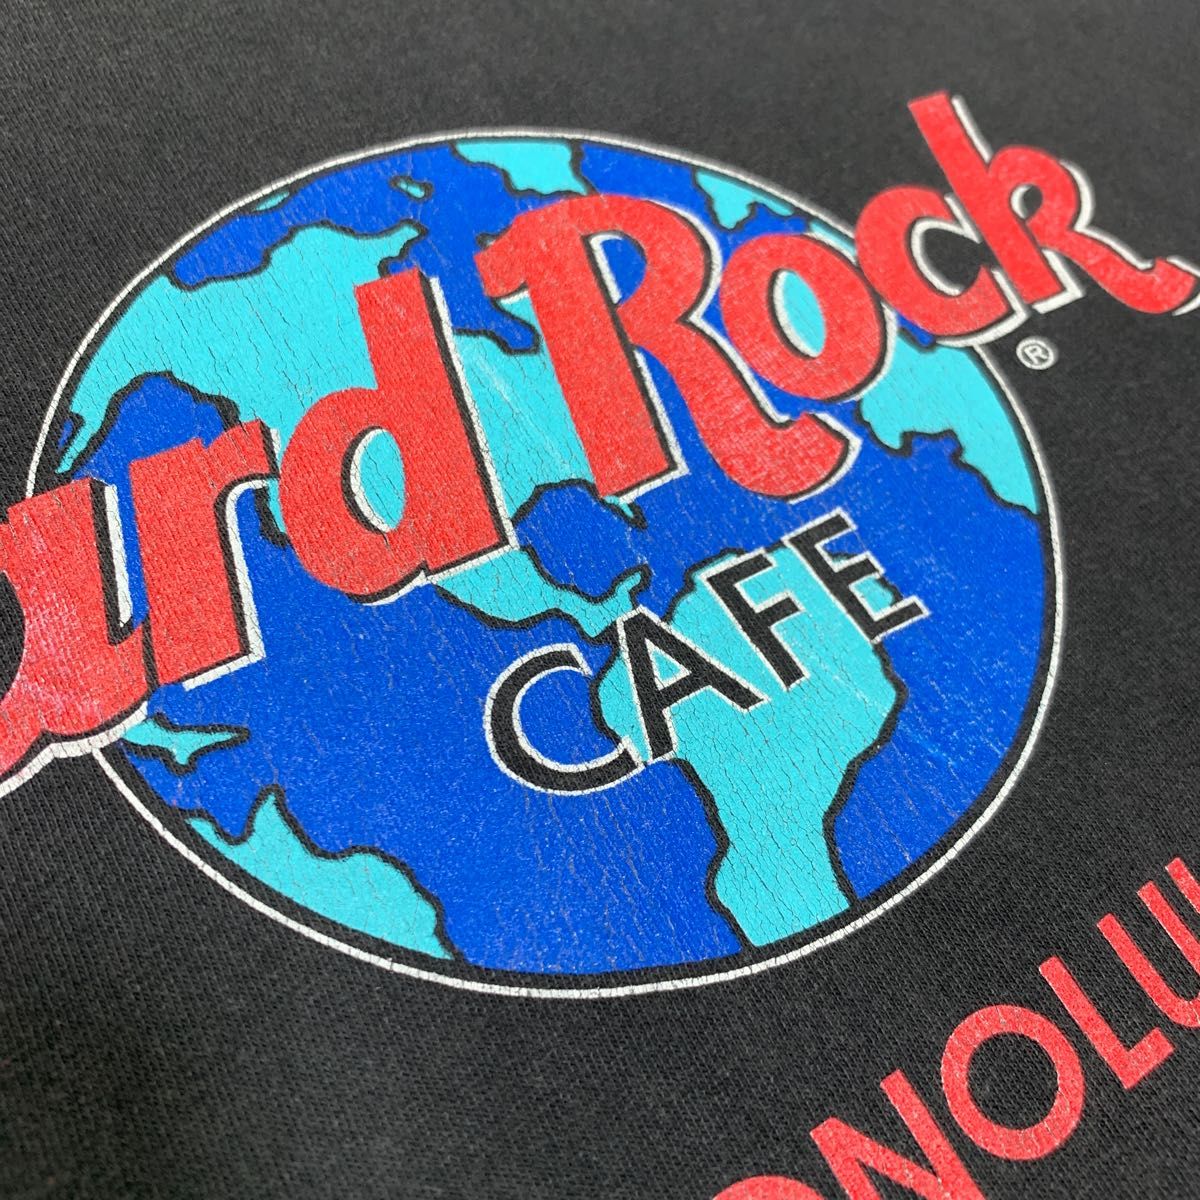 Hard Rock CAFE Vintage Fade Tee